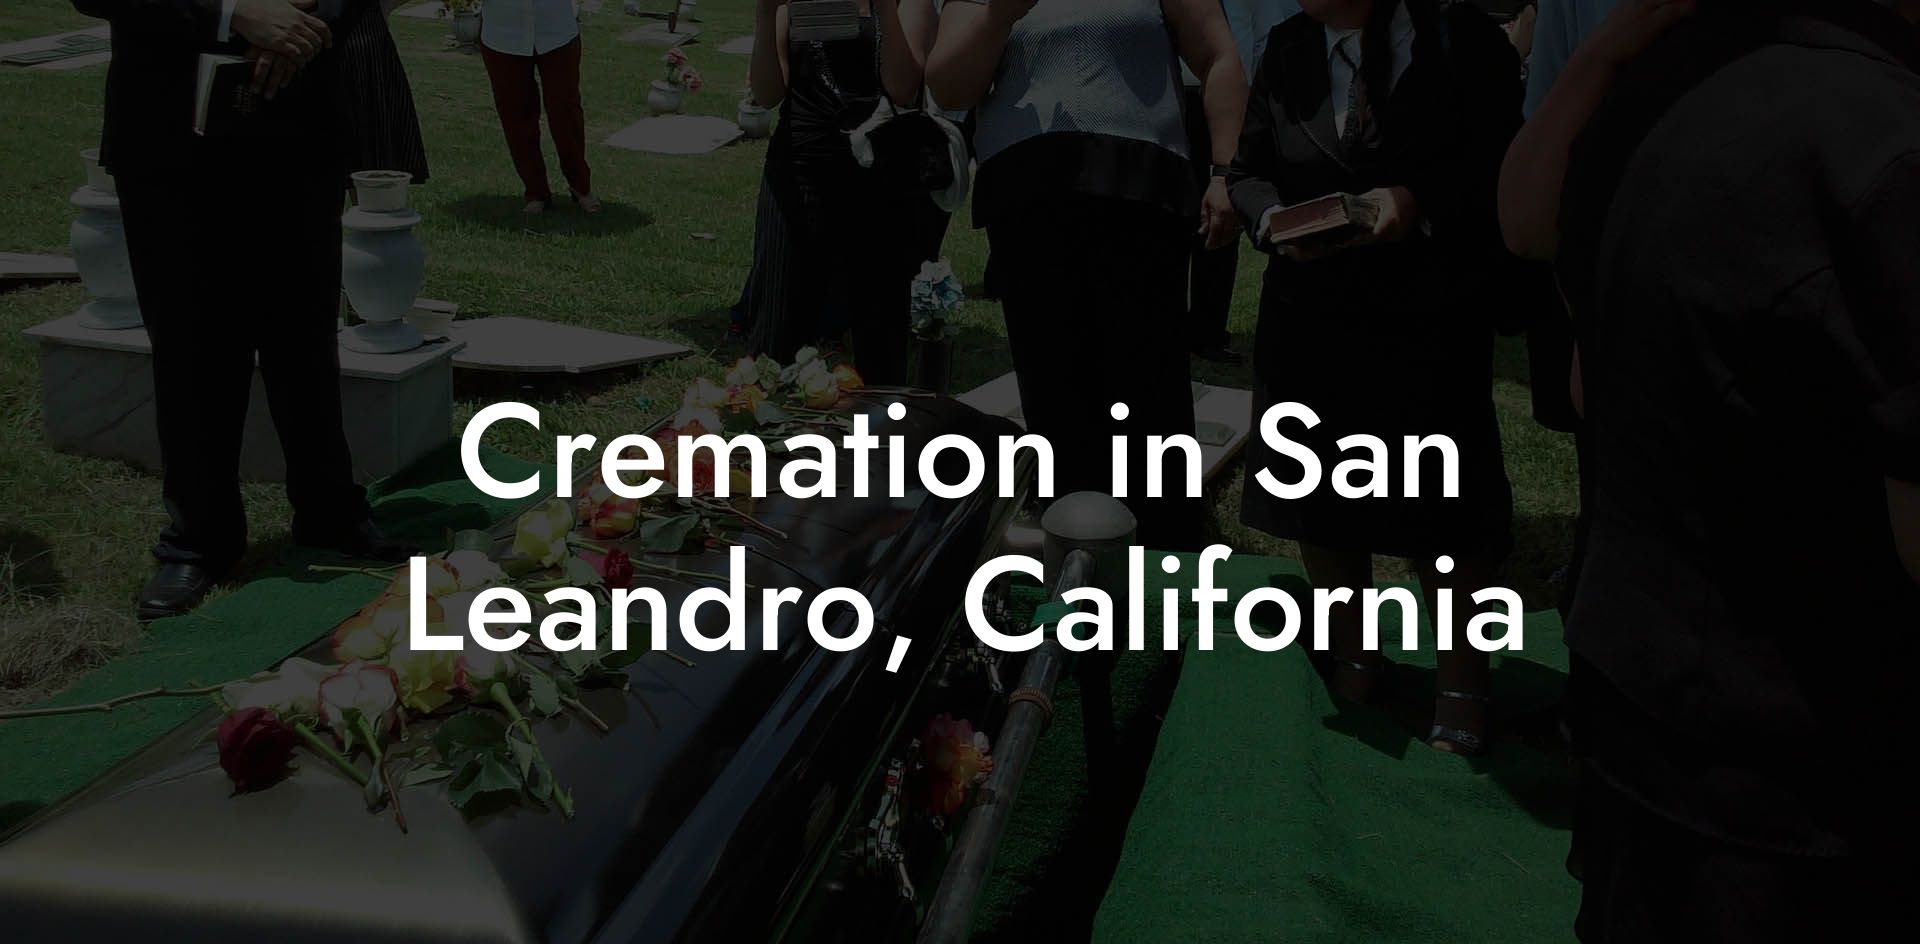 Cremation in San Leandro, California